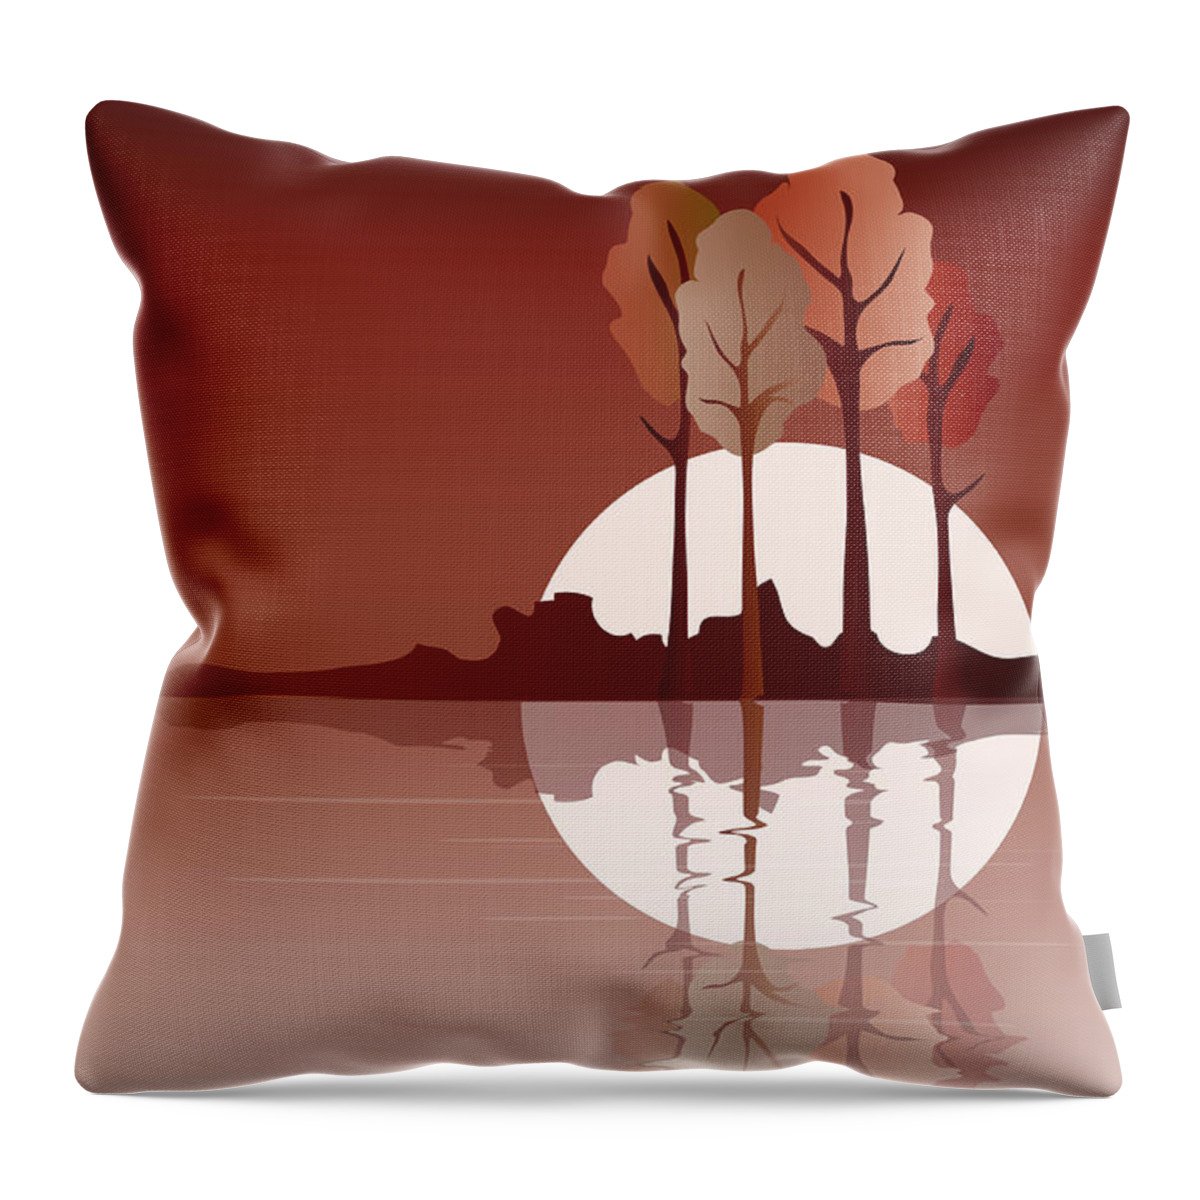 Art Throw Pillow featuring the digital art Autumn reflected by Jane Rix